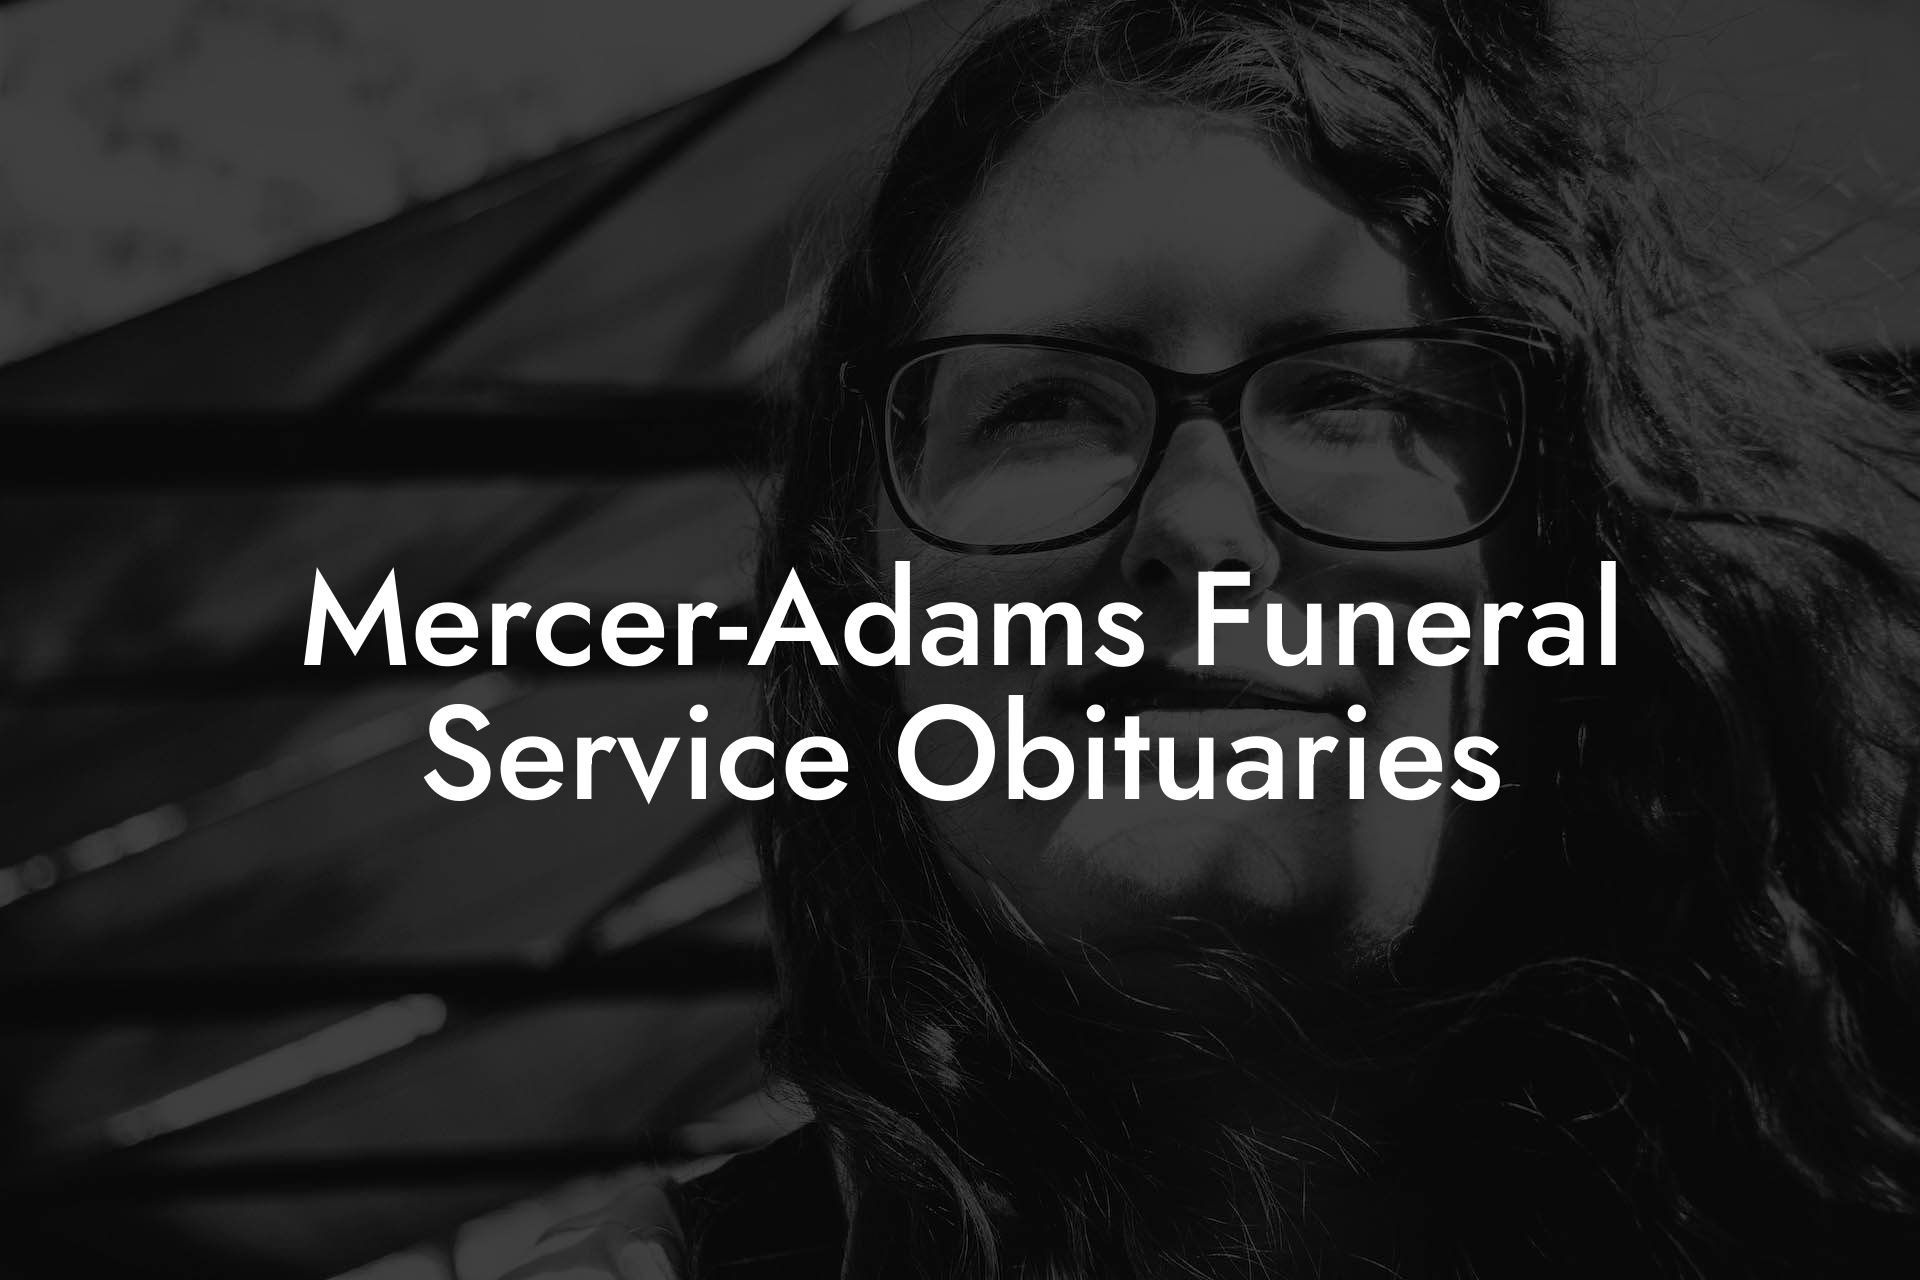 Mercer-Adams Funeral Service Obituaries